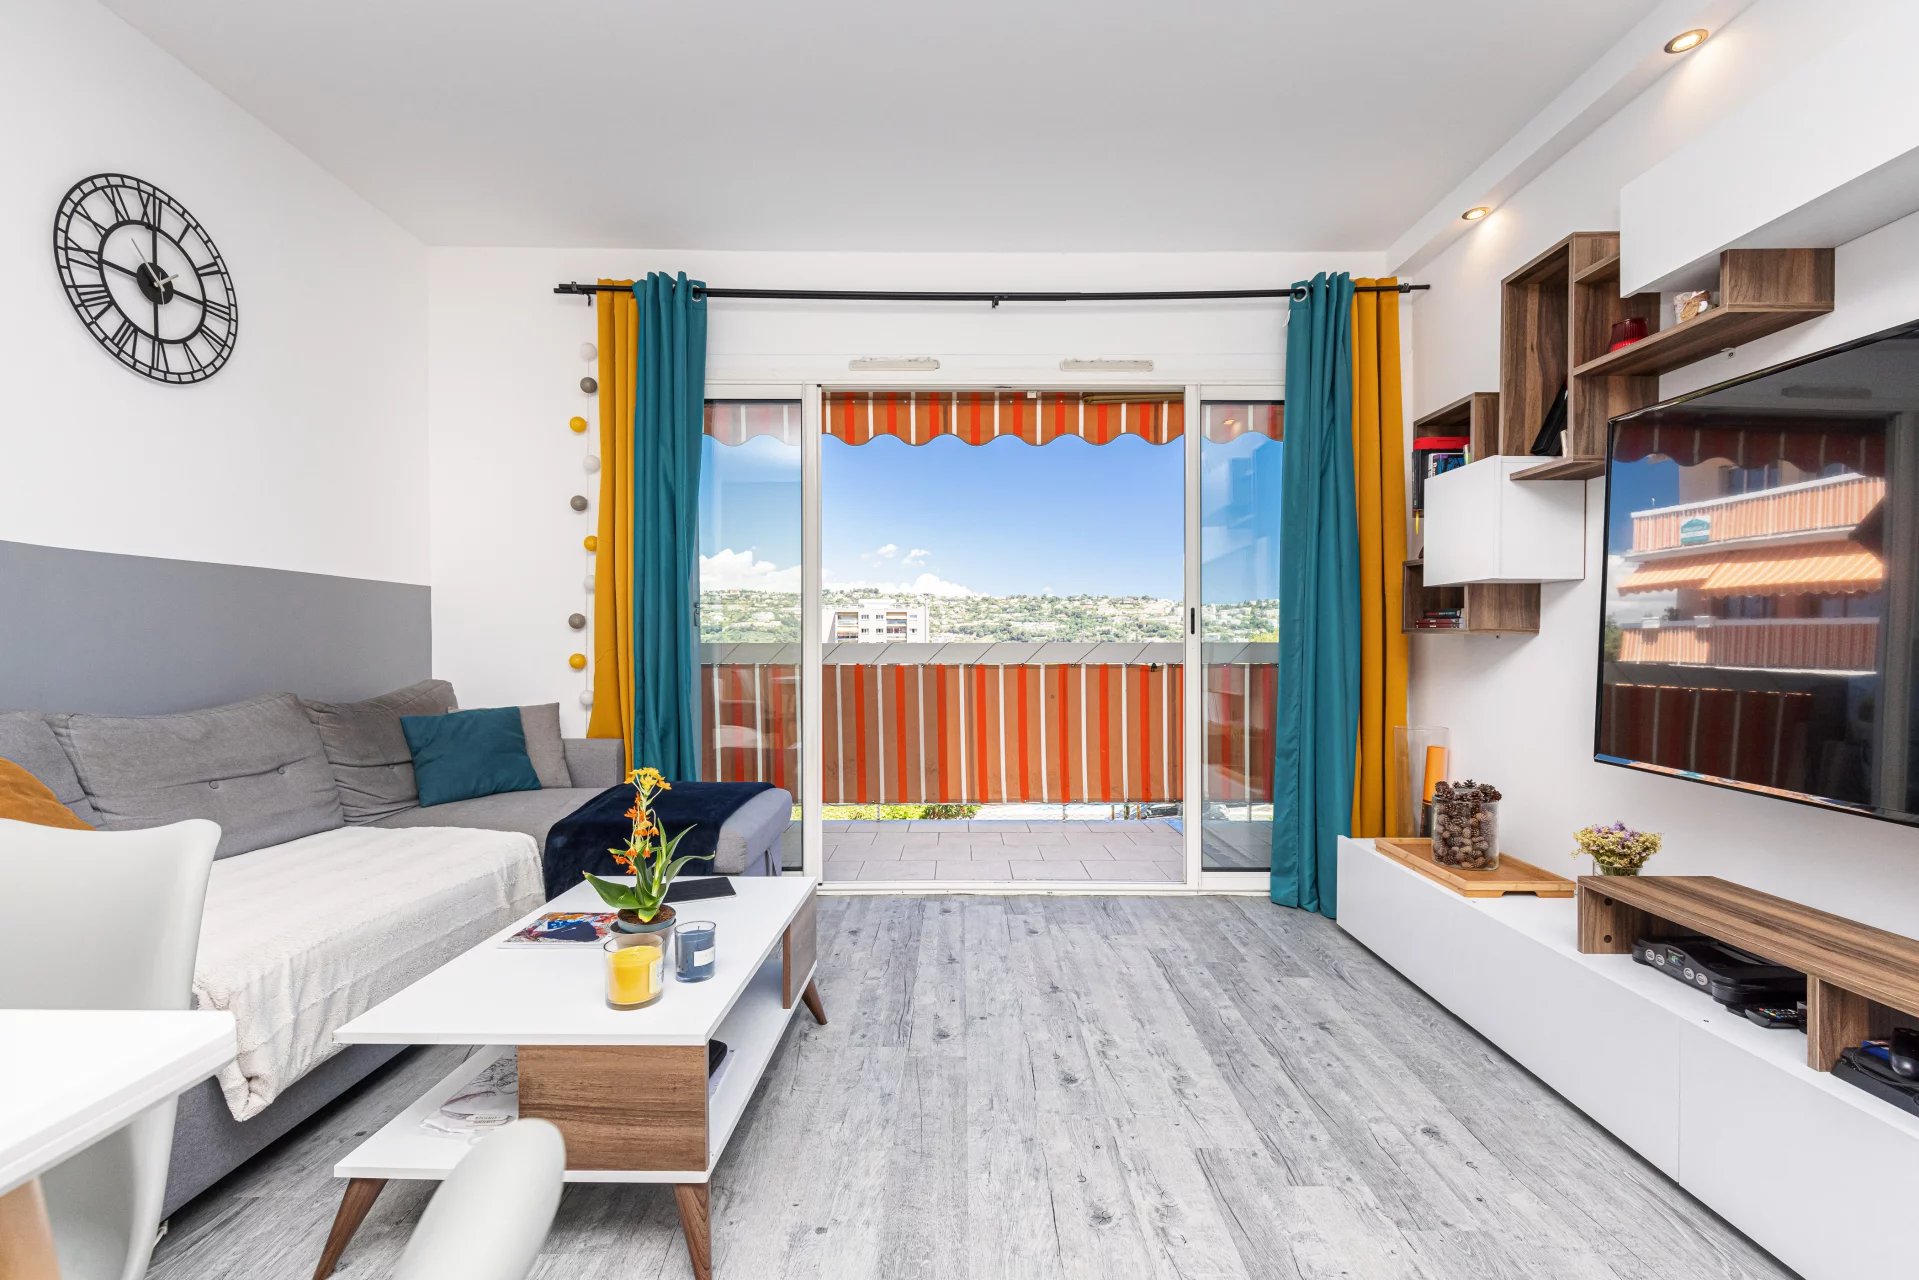 Saint Laurent du Var / Les Pugets - One-bedroom renovated apartment Terrace Cellar